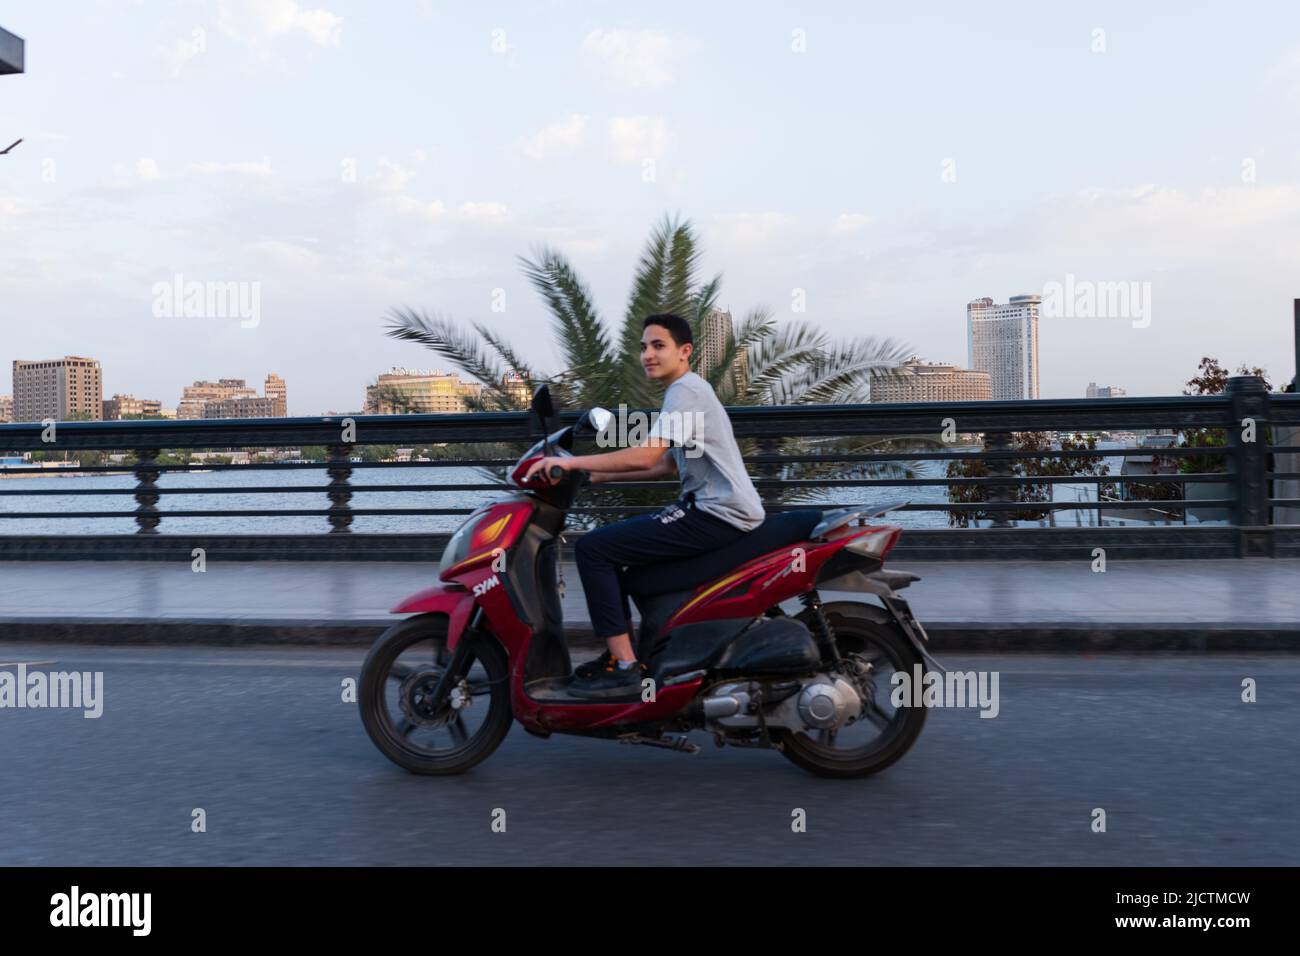 Cairo Street Photography Stock Photo